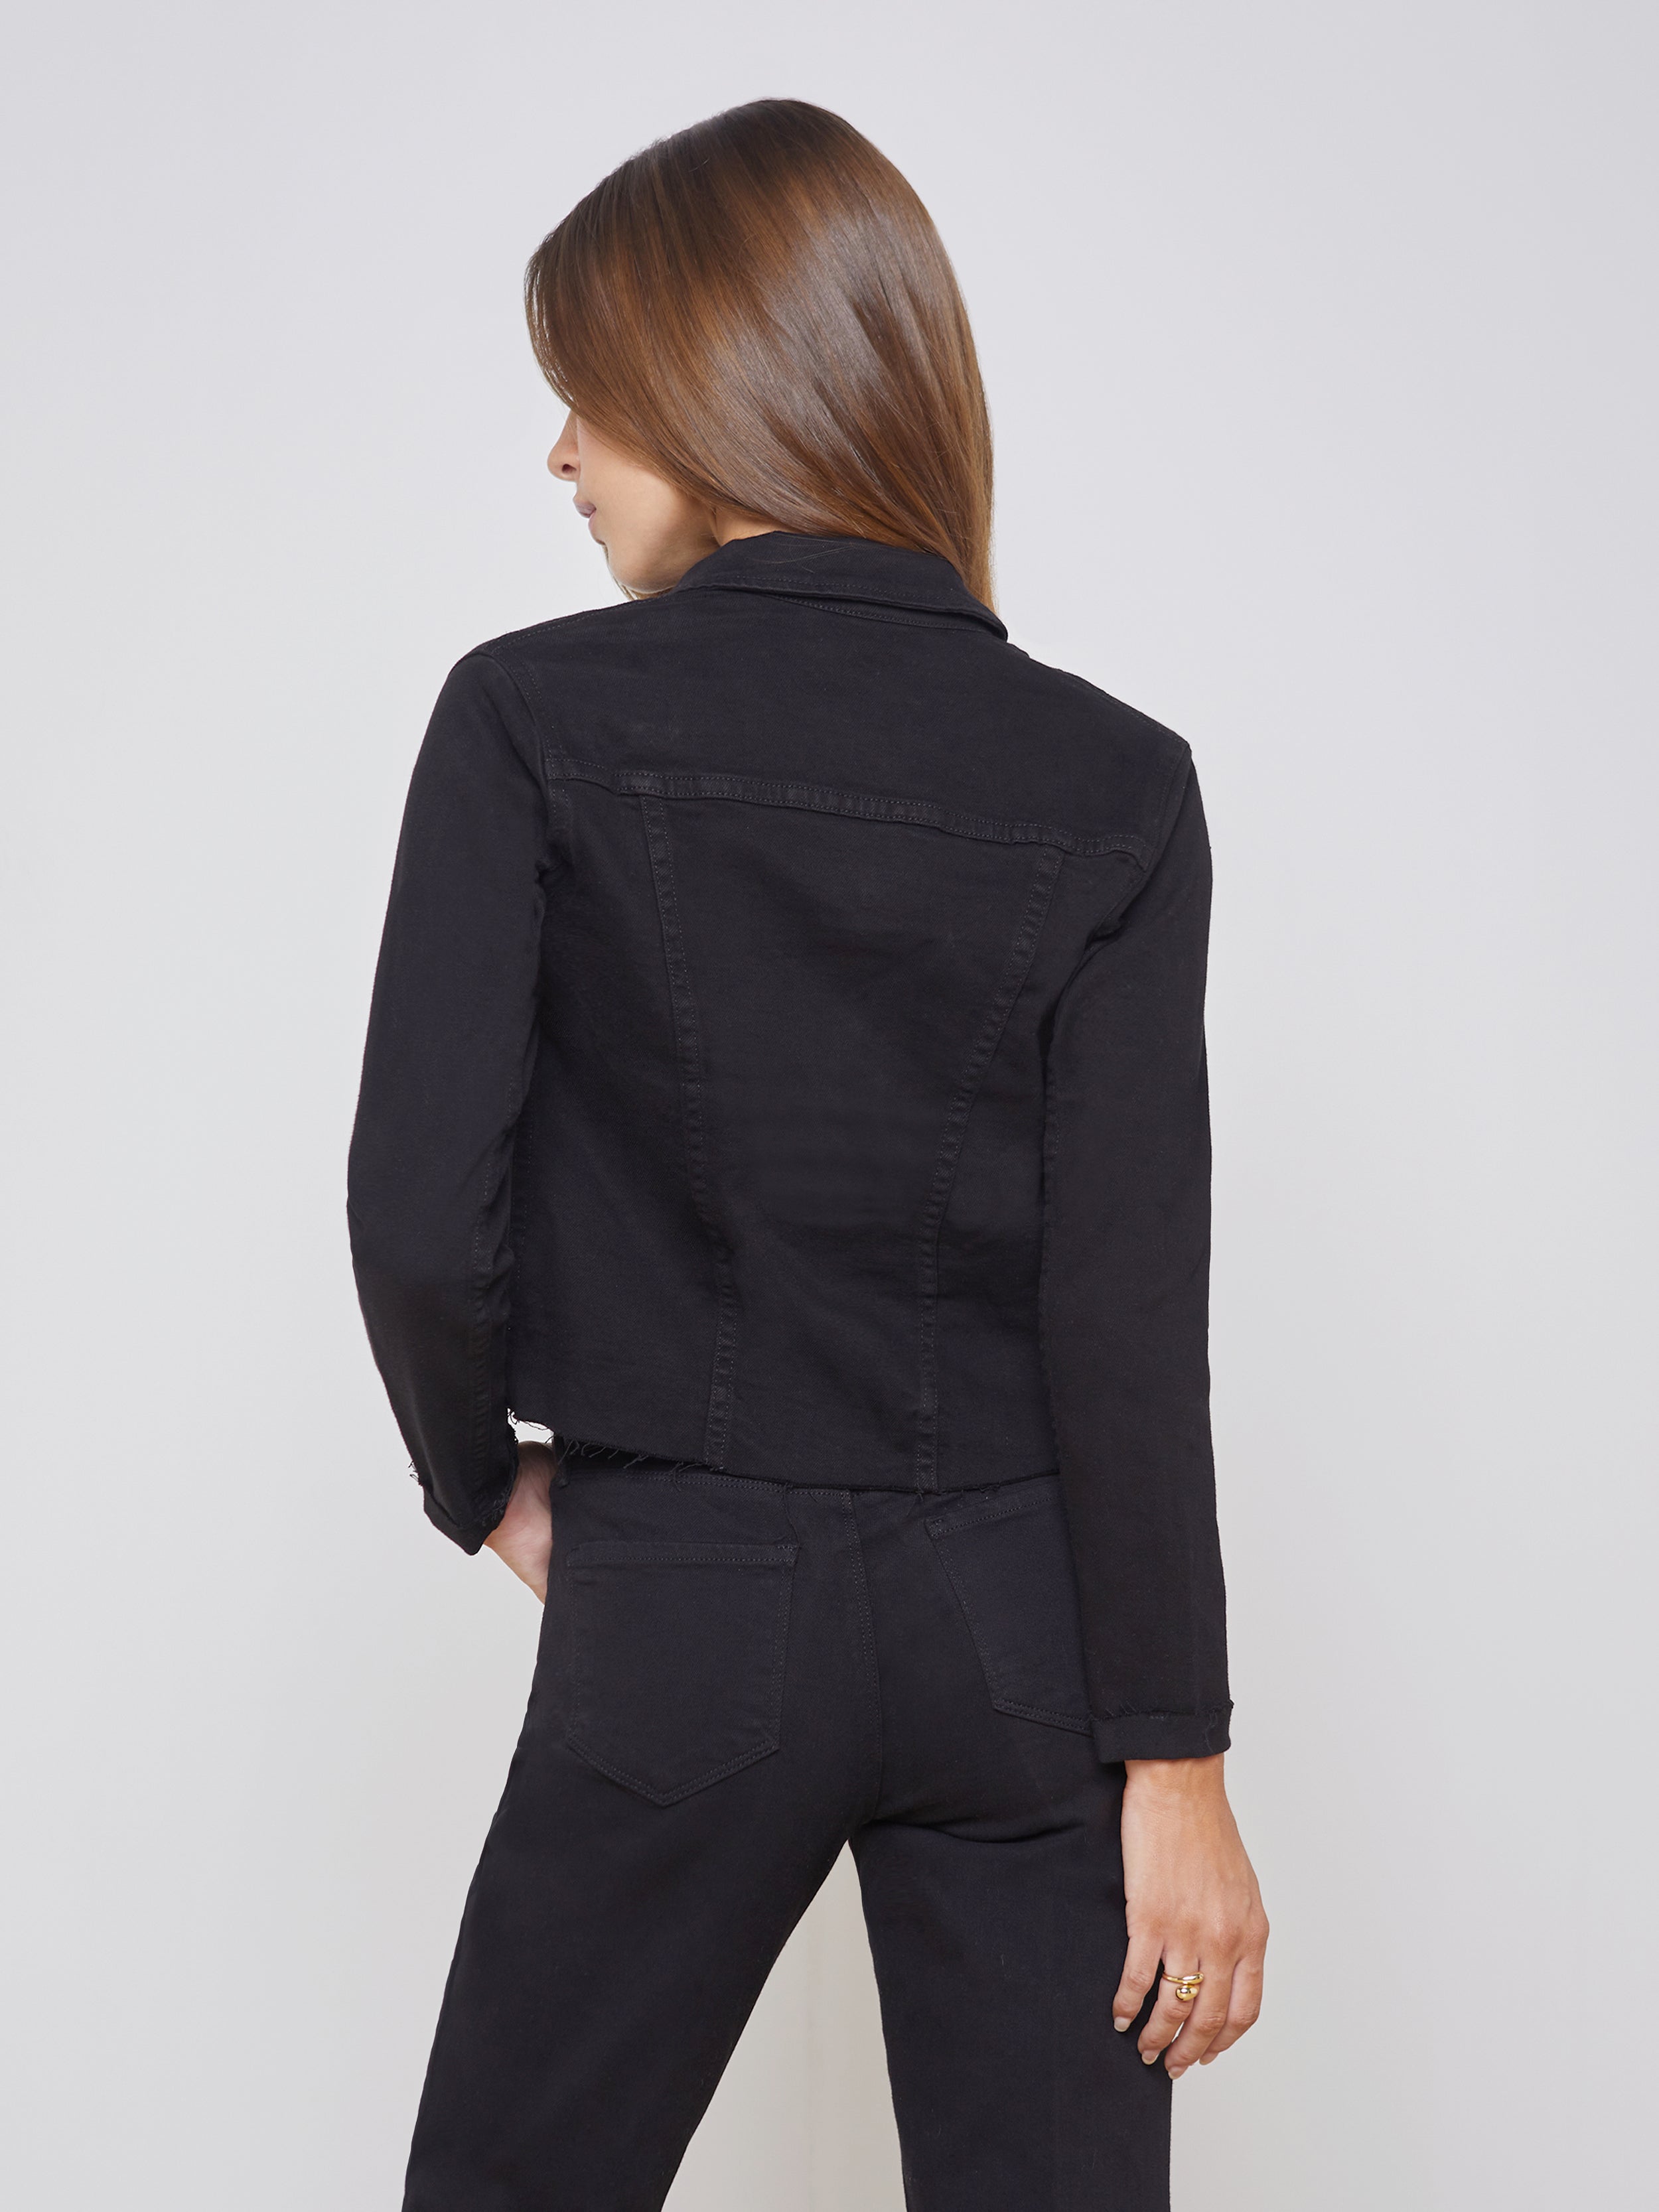 Agnes Orinda Women's Plus Size Washed Ripped Distressed Cropped Frayed Denim  Jacket Black 1x : Target